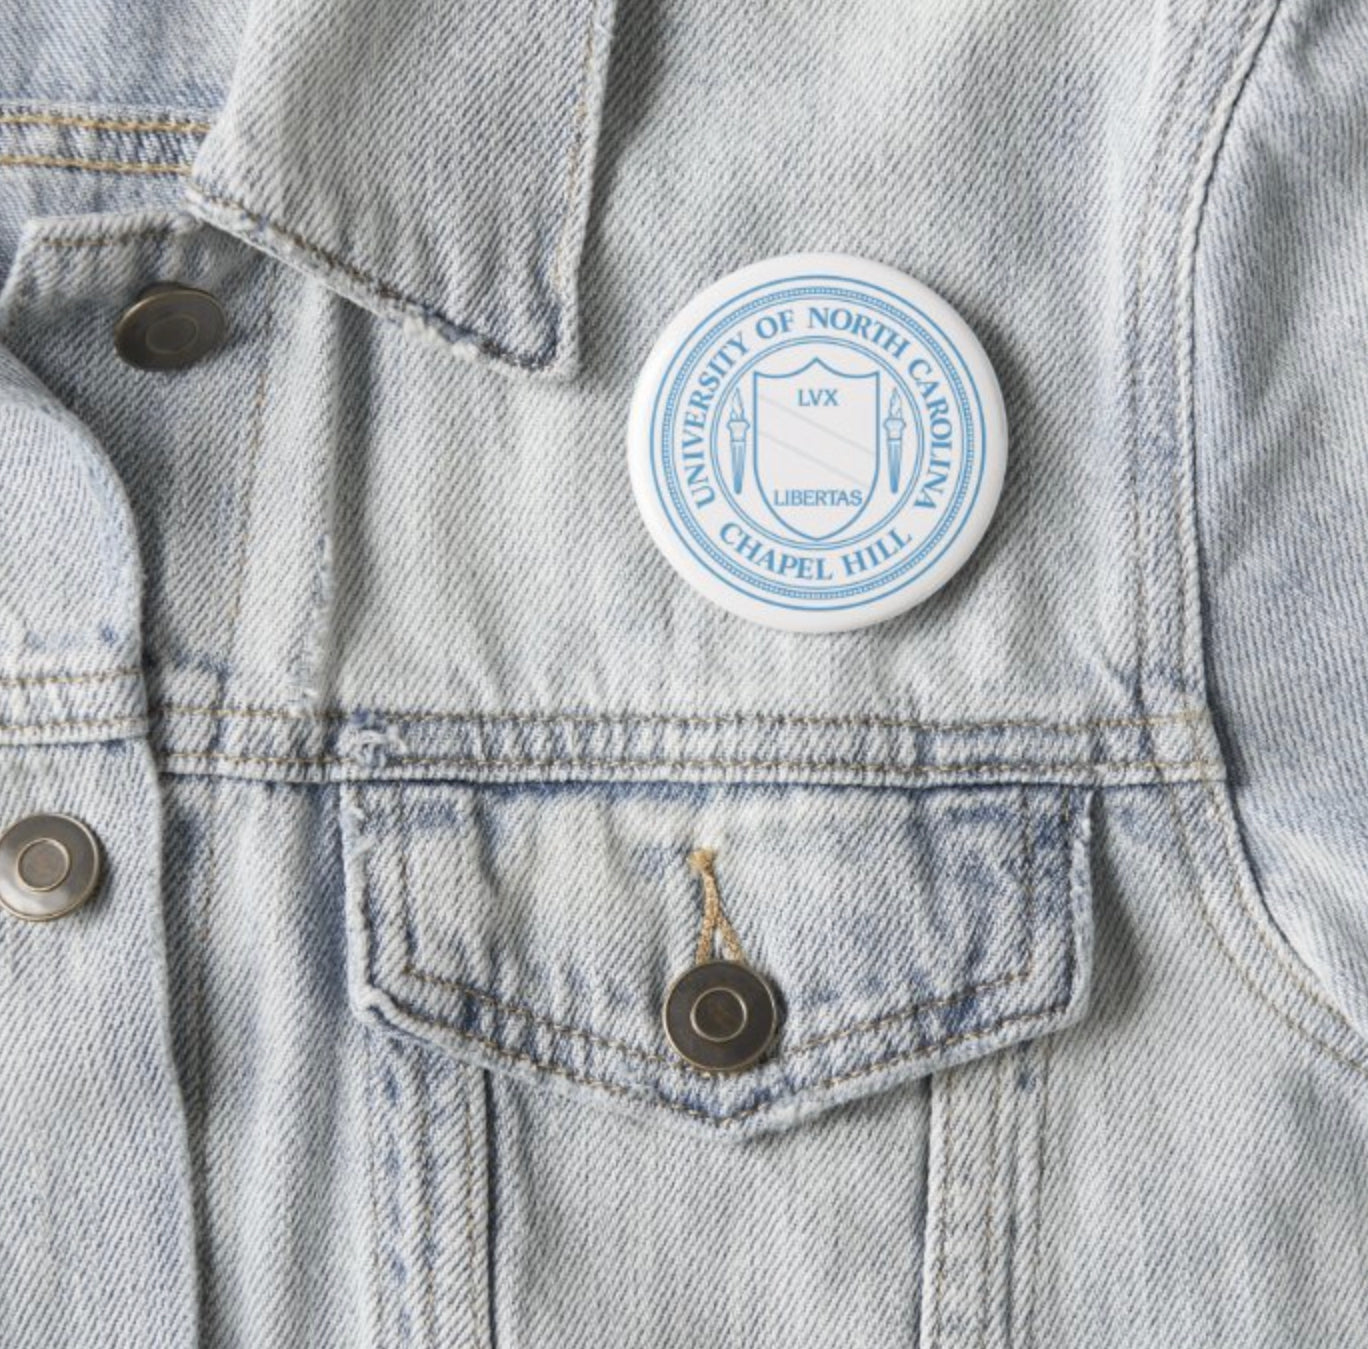 UNC Chapel Hill School Seal Button Pin in Carolina Blue and White